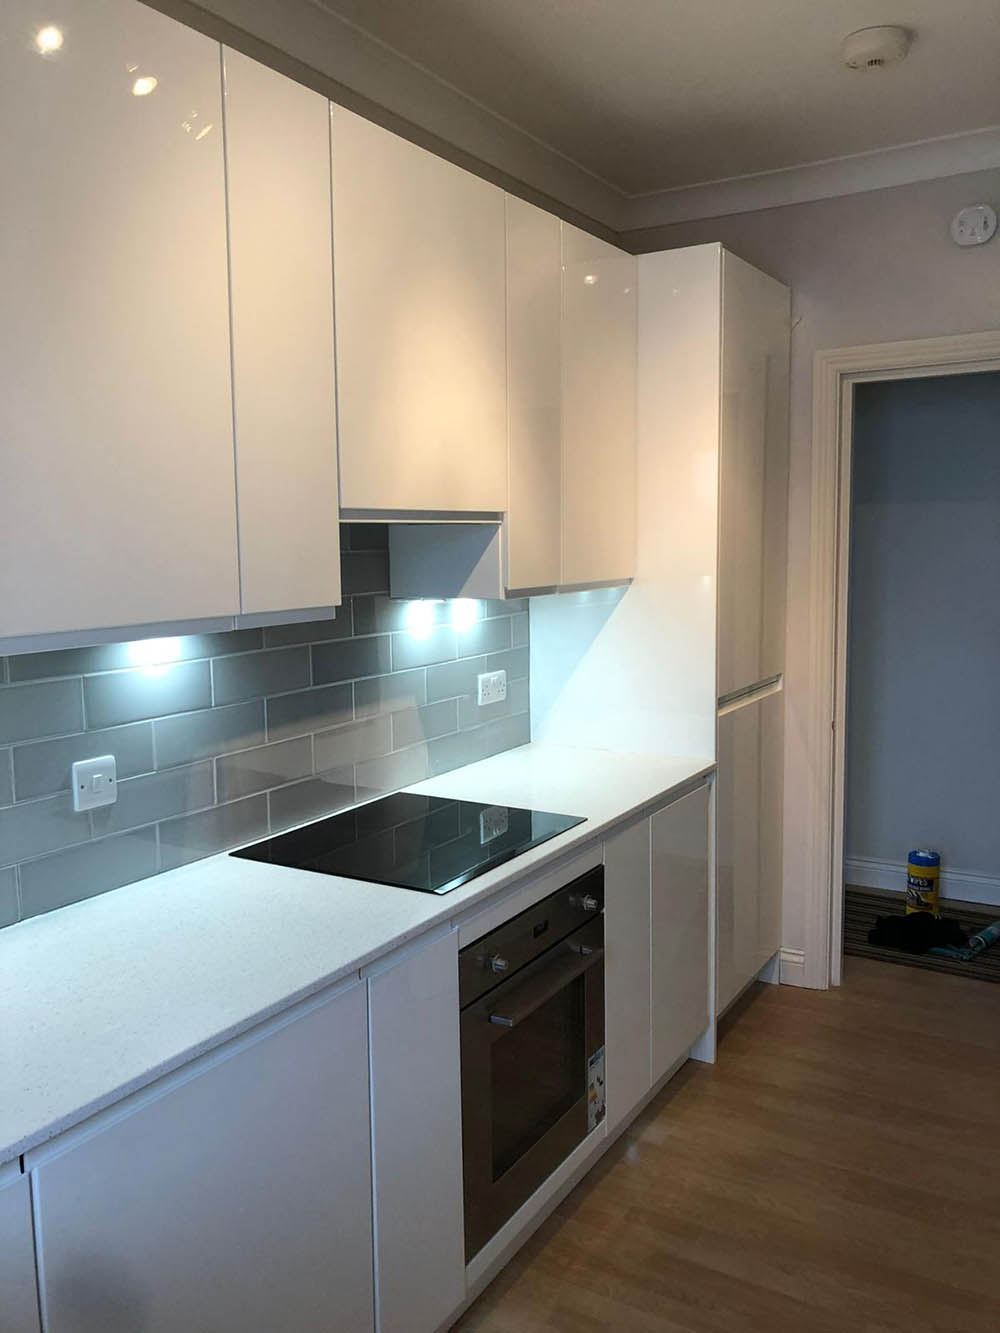 Modern white kitchen with grey tile backsplash